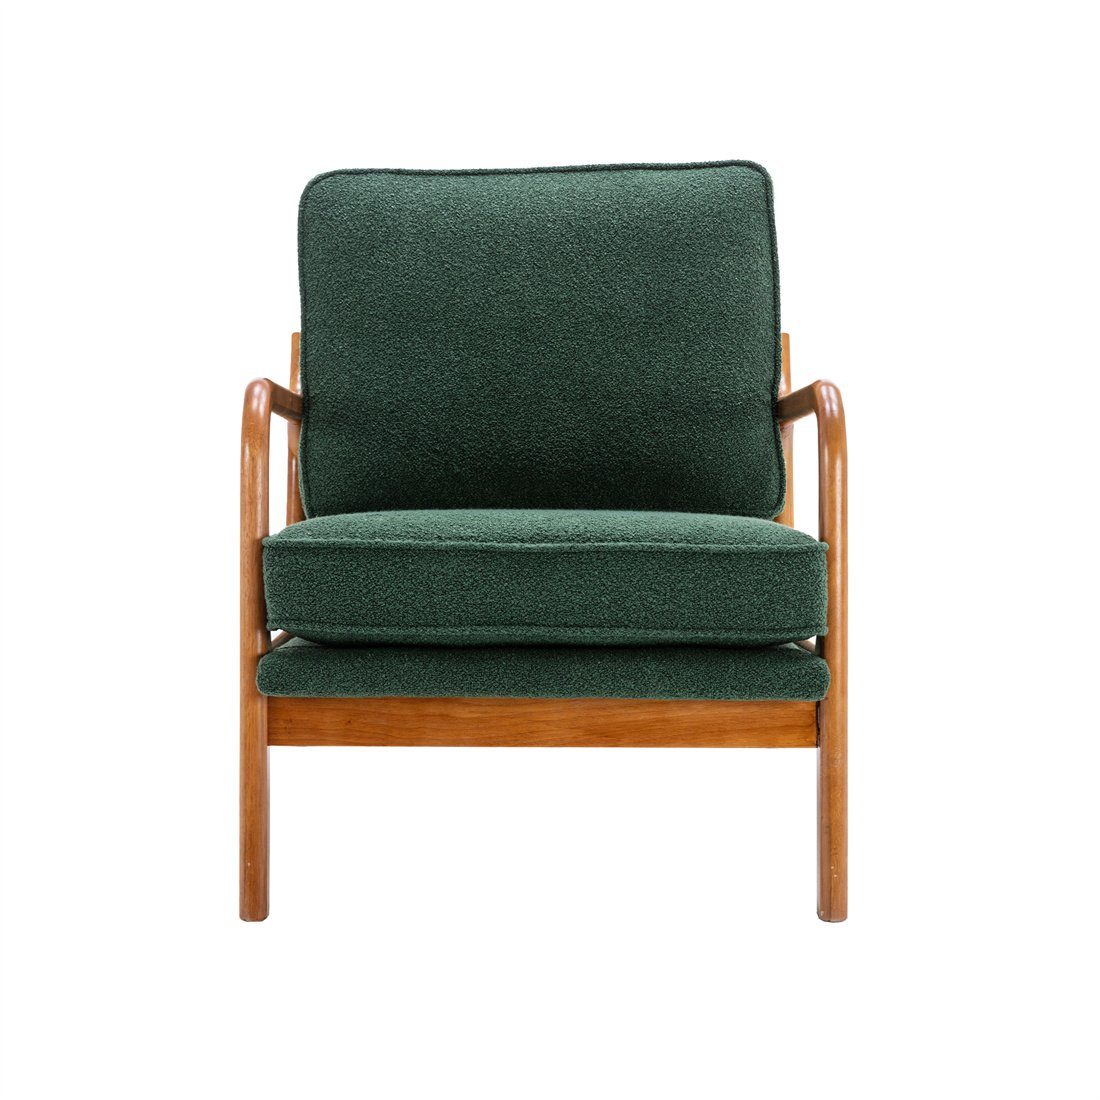 DÖRÖY Polsterstuhl Holzgestell Sessel, Stuhl Lounge Stuhl Wohnzimmer Moderner Dekorativer